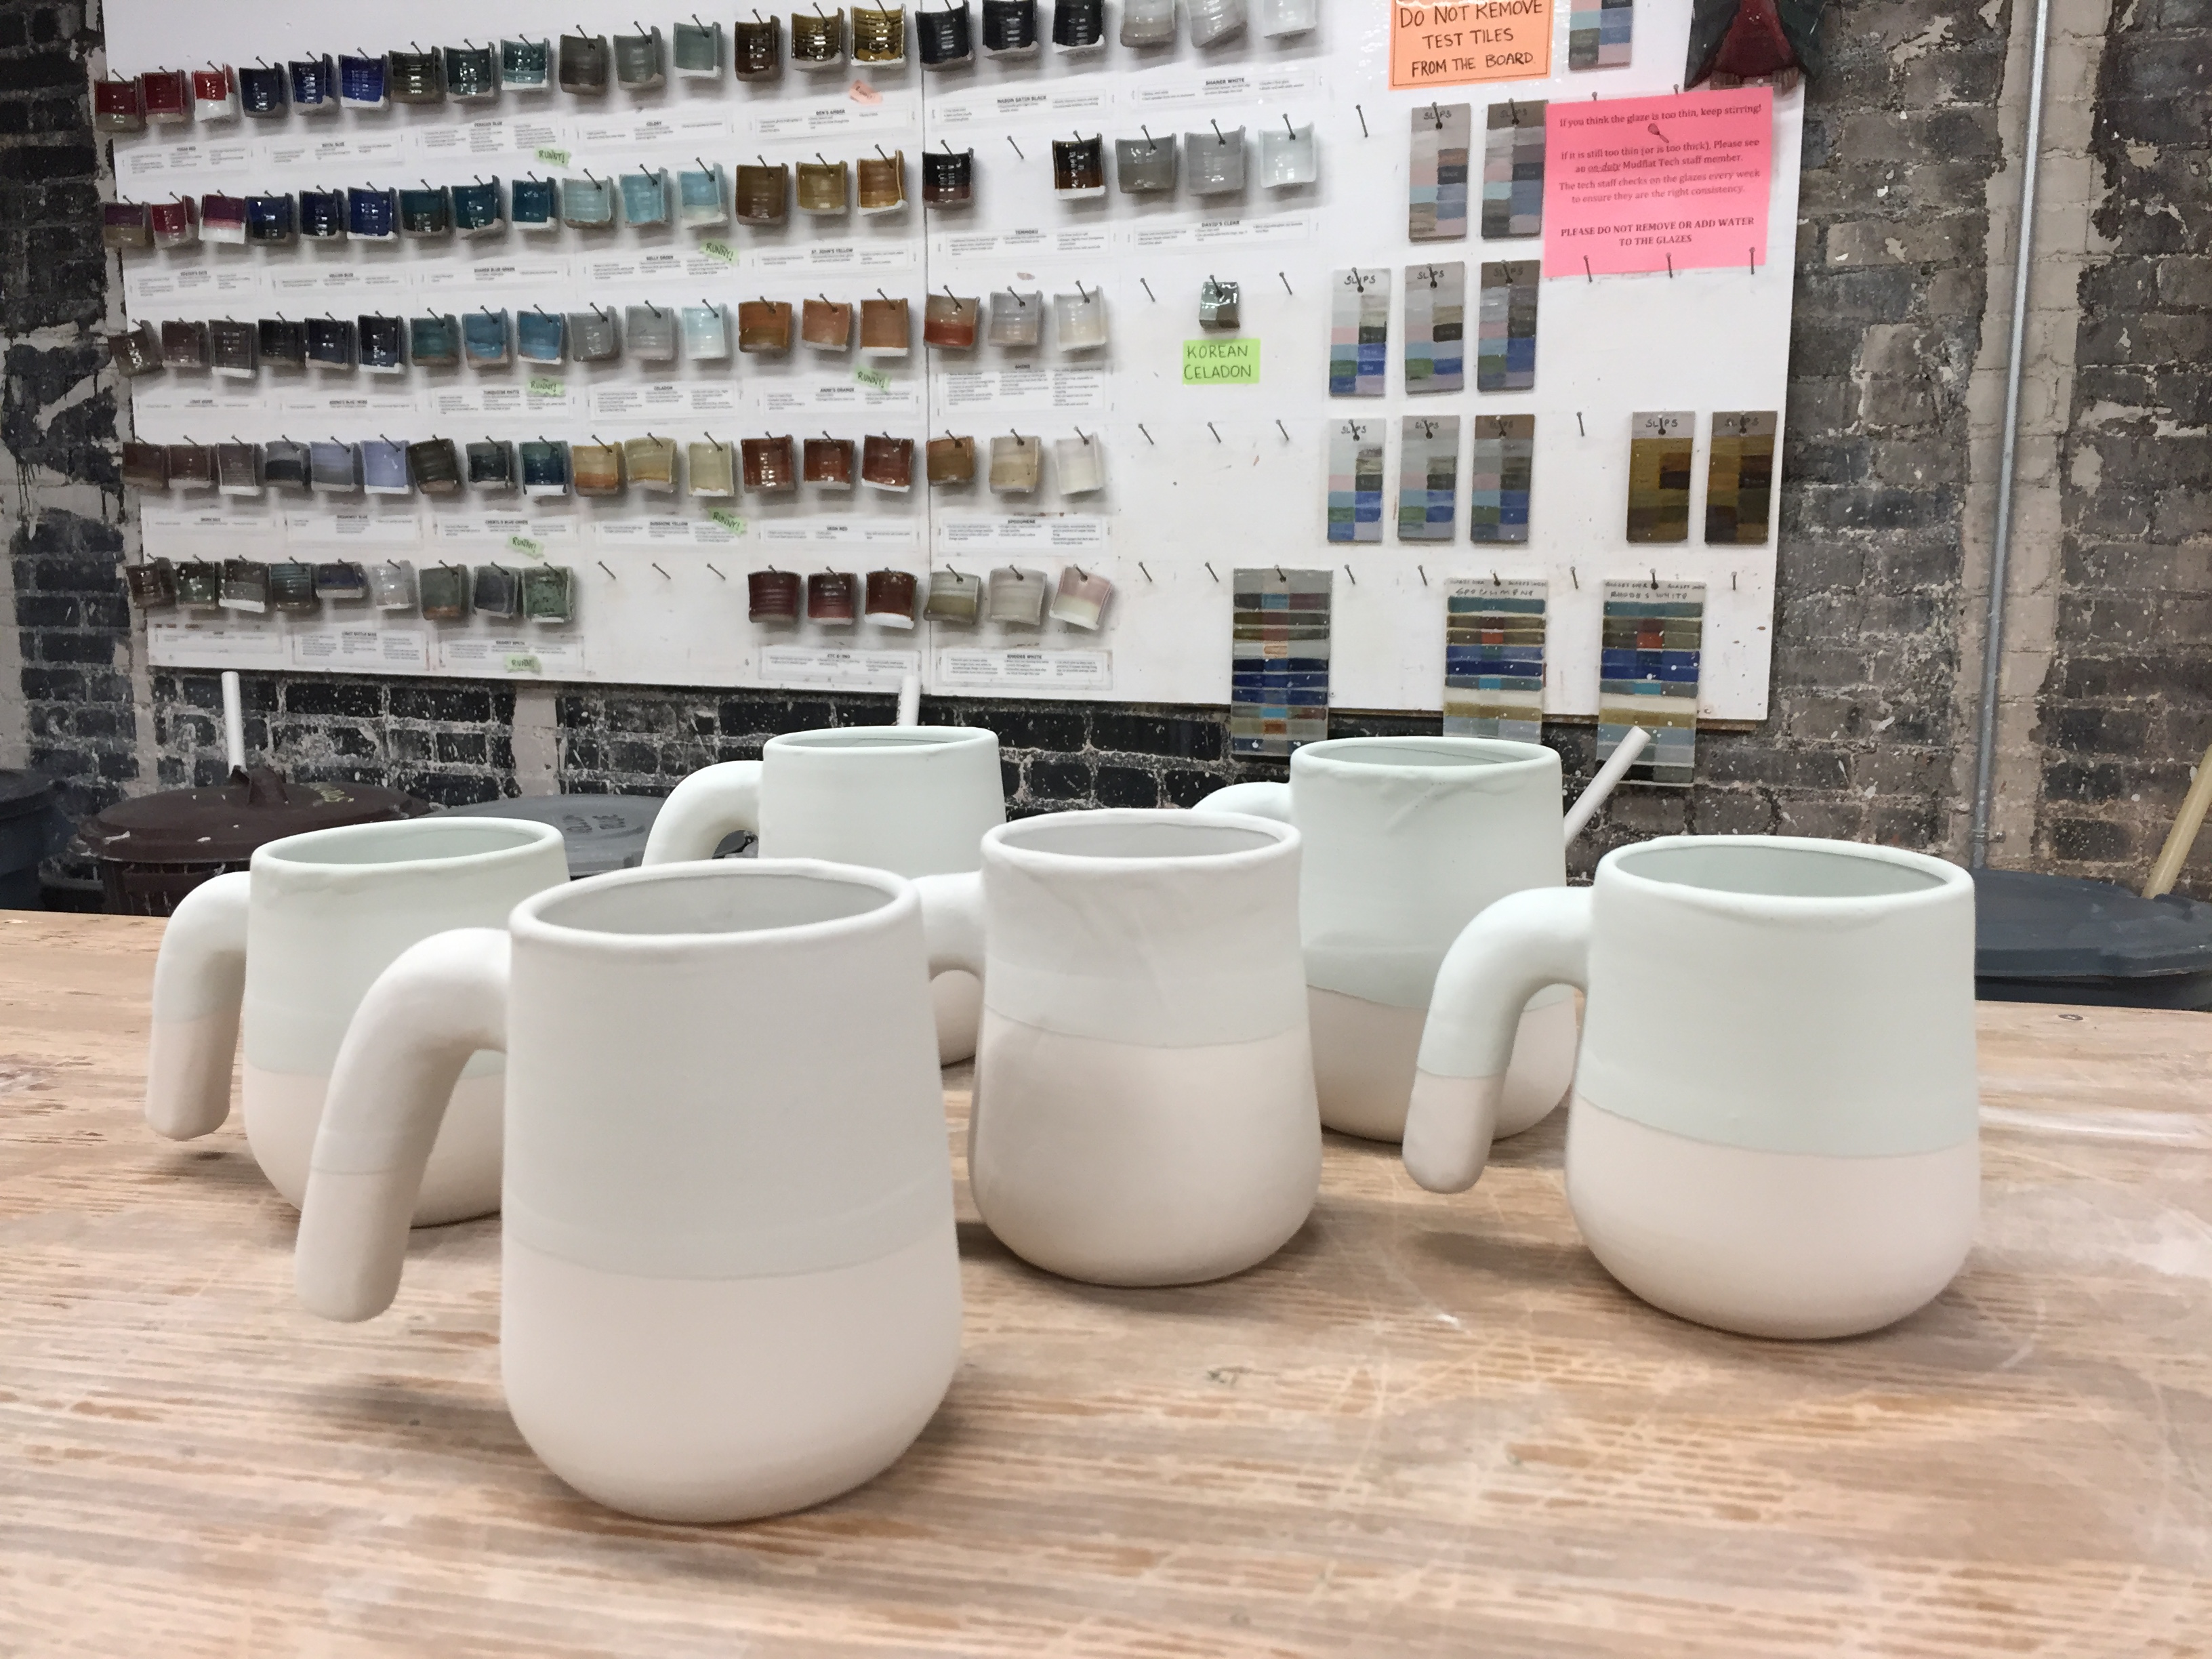 Mugs ready to be glaze fired